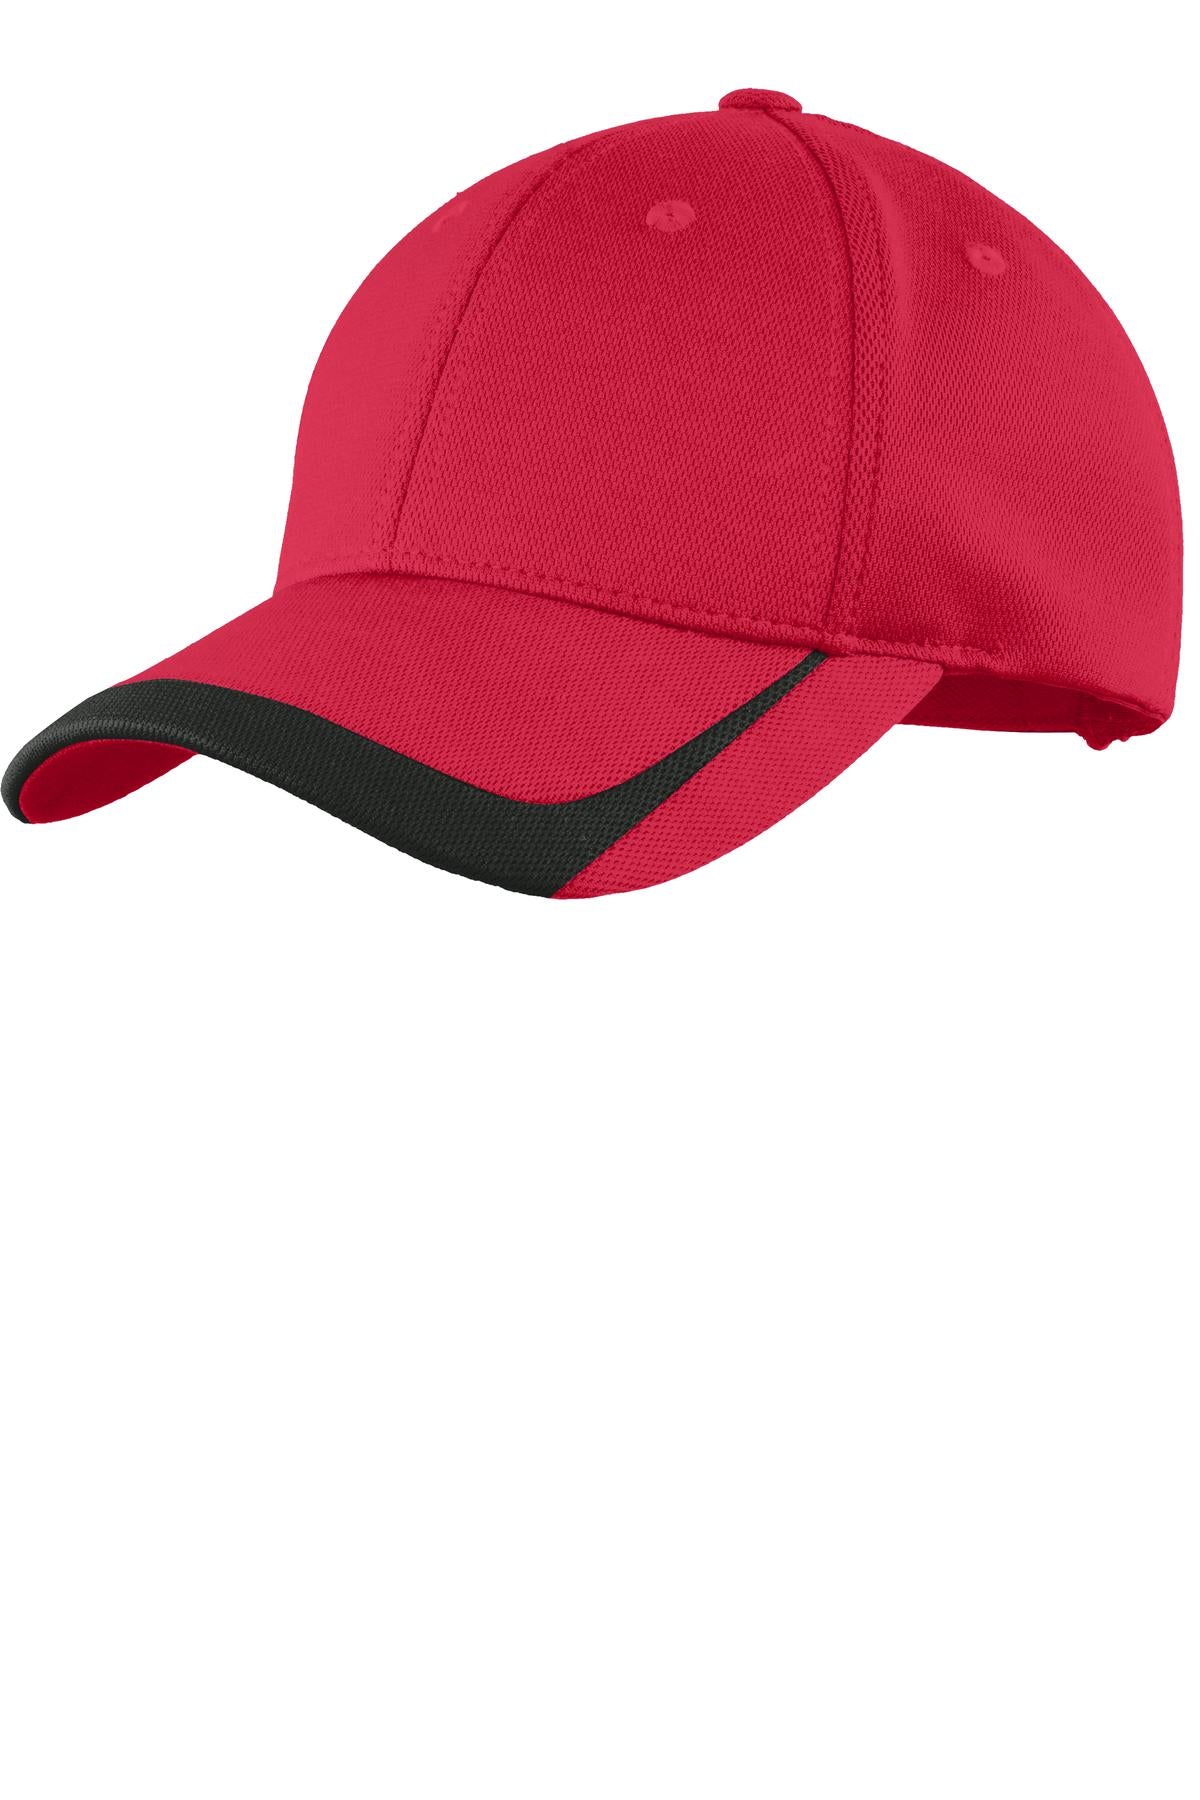 Caps True Red/ Black OSFA Sport-Tek